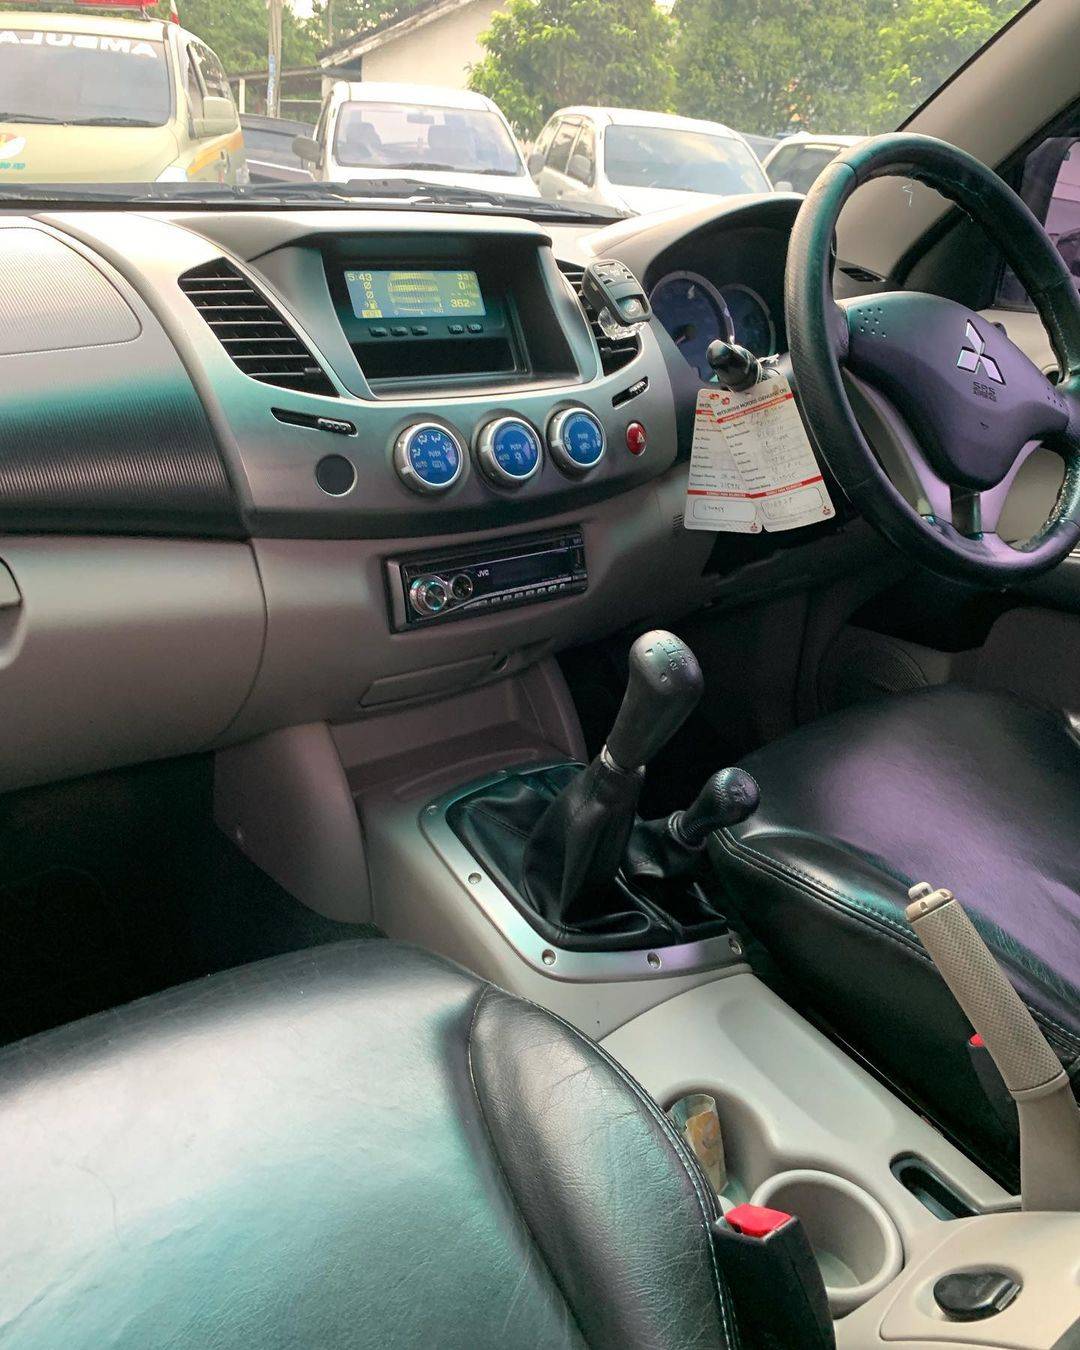 2008 Mitsubishi Triton Exceed MT Double Cab 4WD Exceed MT Double Cab 4WD tua